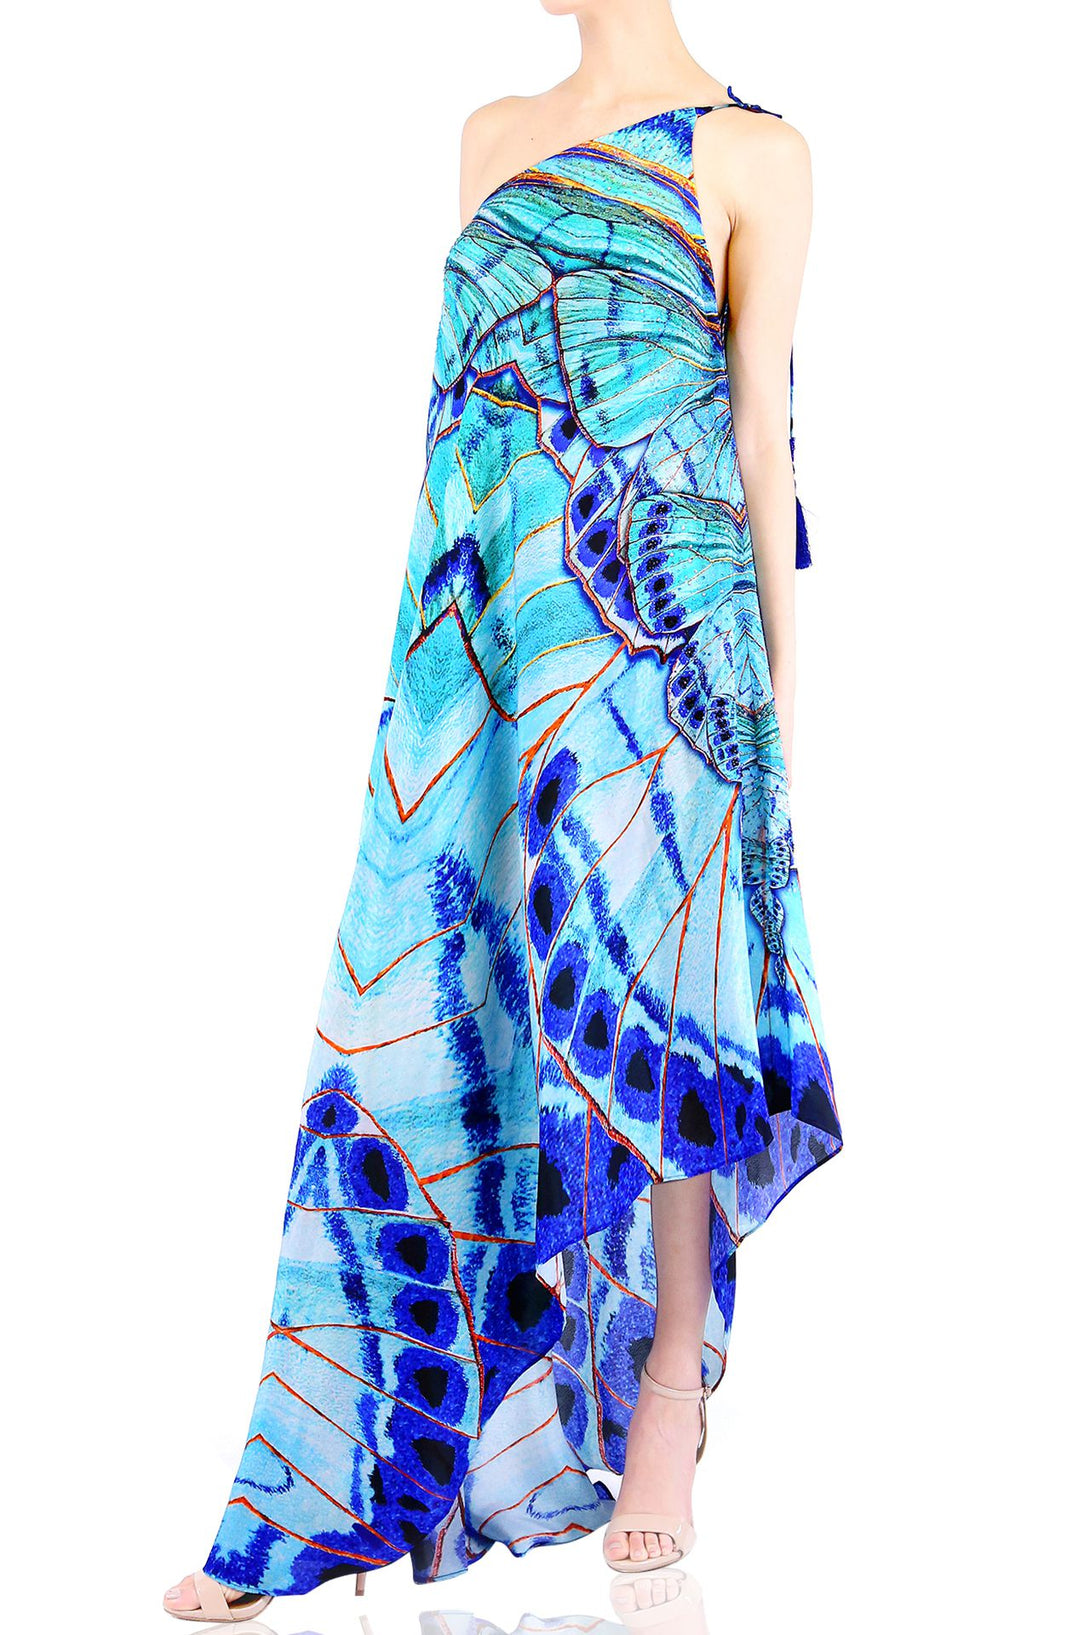  long blue formal dresses, formal dresses for women, Shahida Parides, plunging neckline cocktail dress,